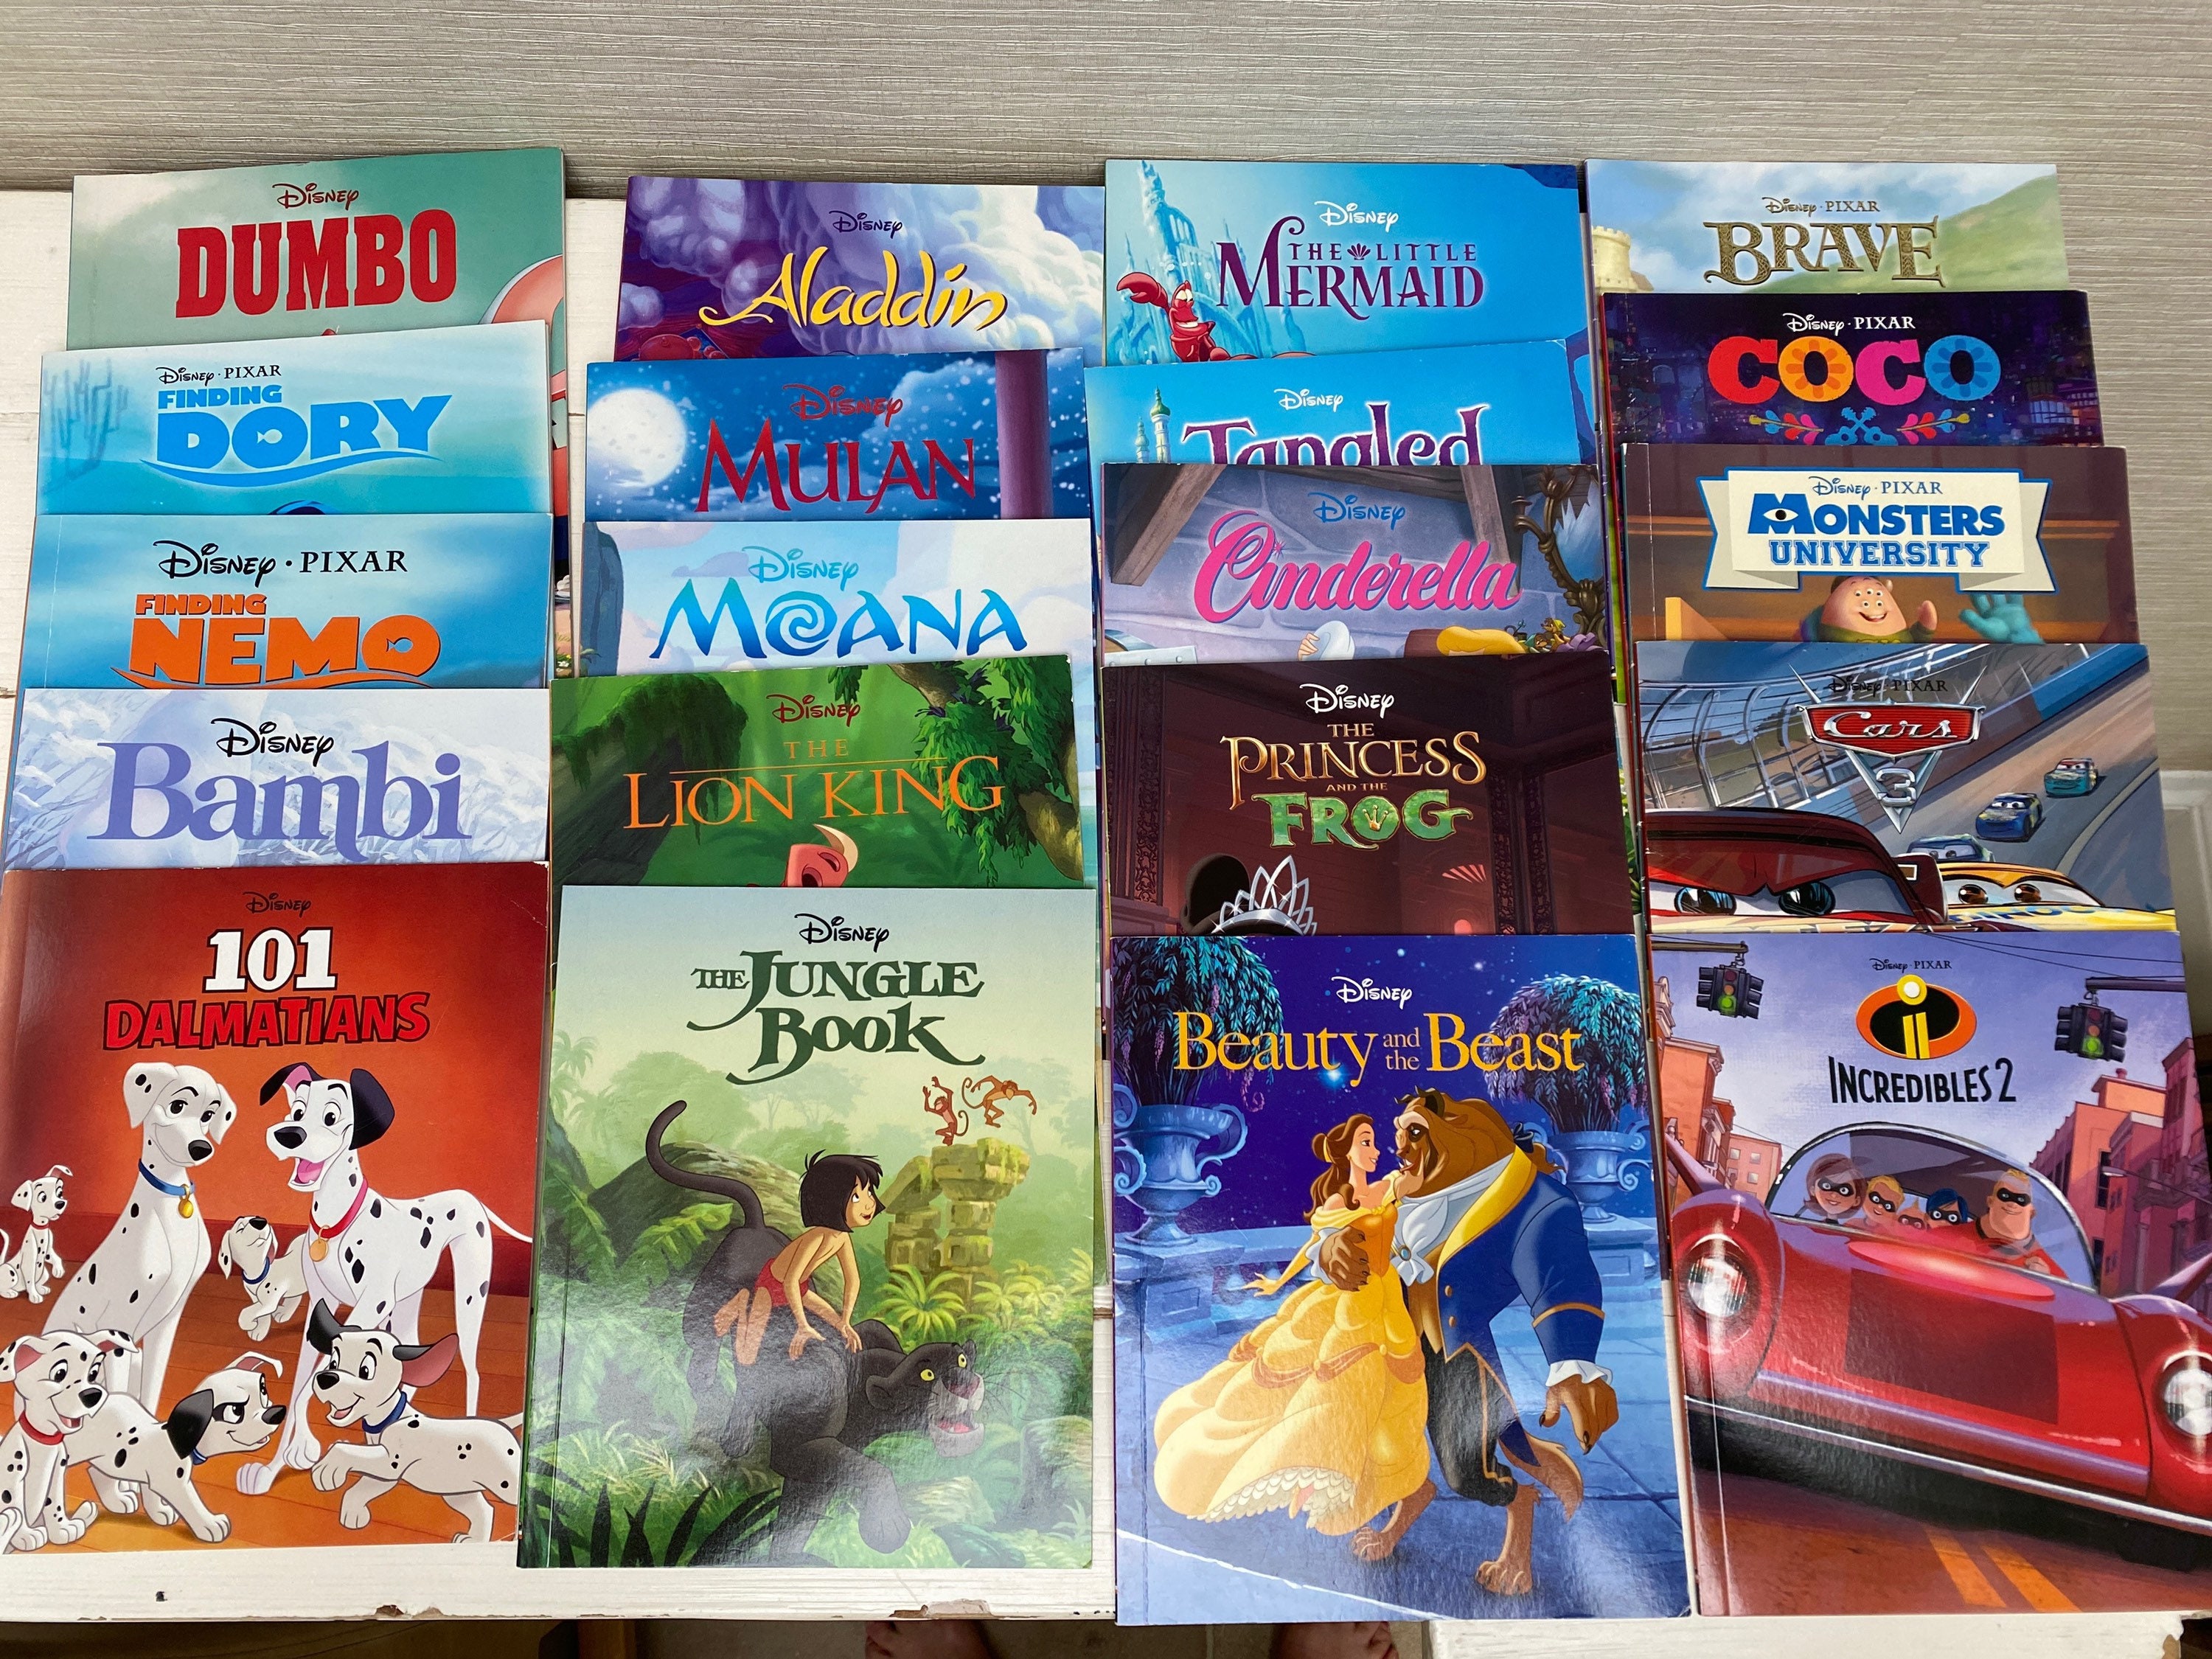 Disney Classics Colouring By Autumn Publishing